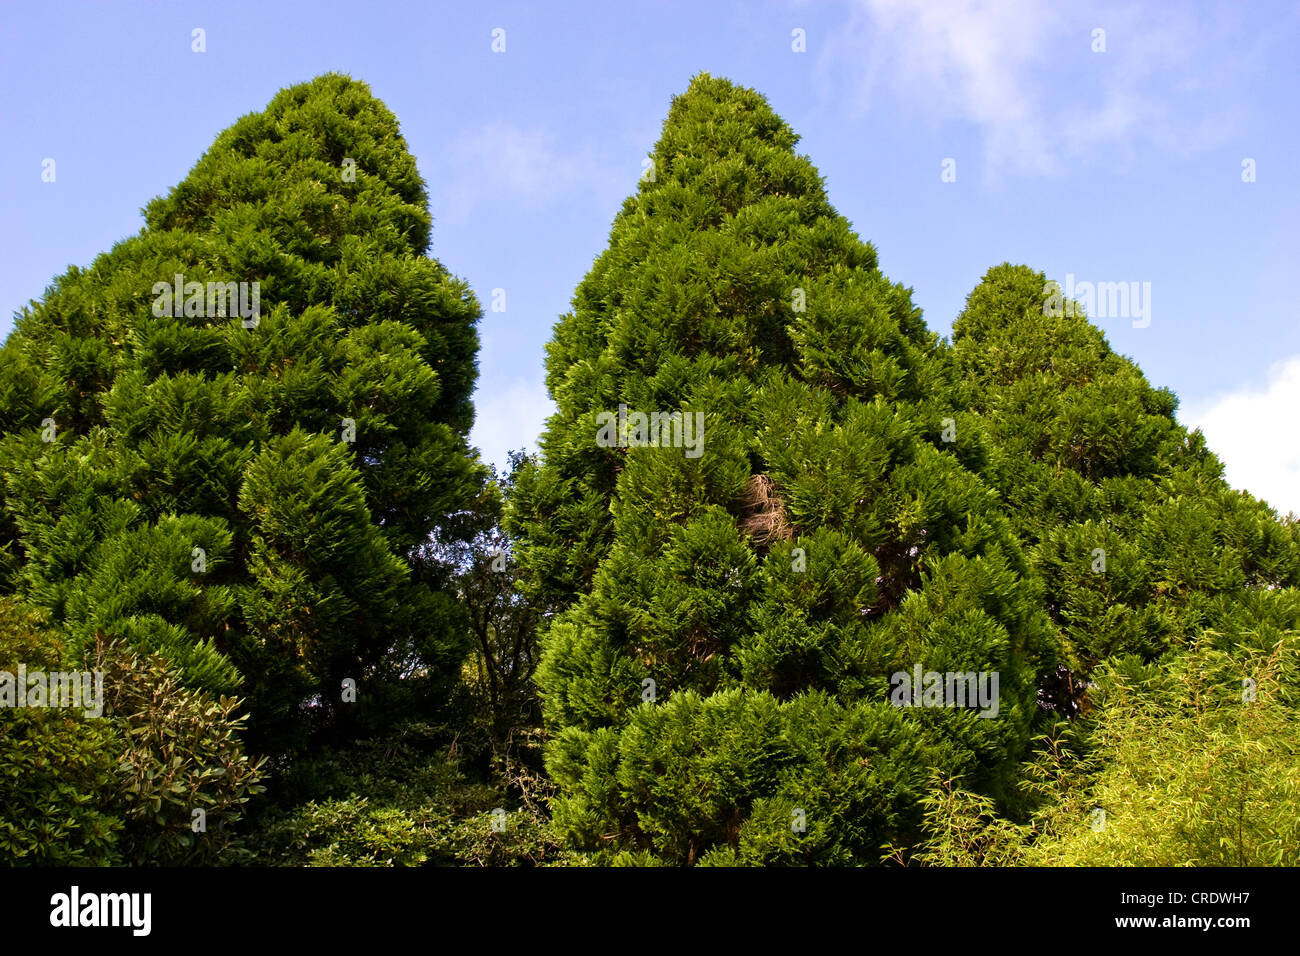 giant sequoia, giant redwood (Sequoiadendron giganteum), in subtropical garden, Ireland, Kerrysdale, Derreen Gardens, Lauragh Stock Photo